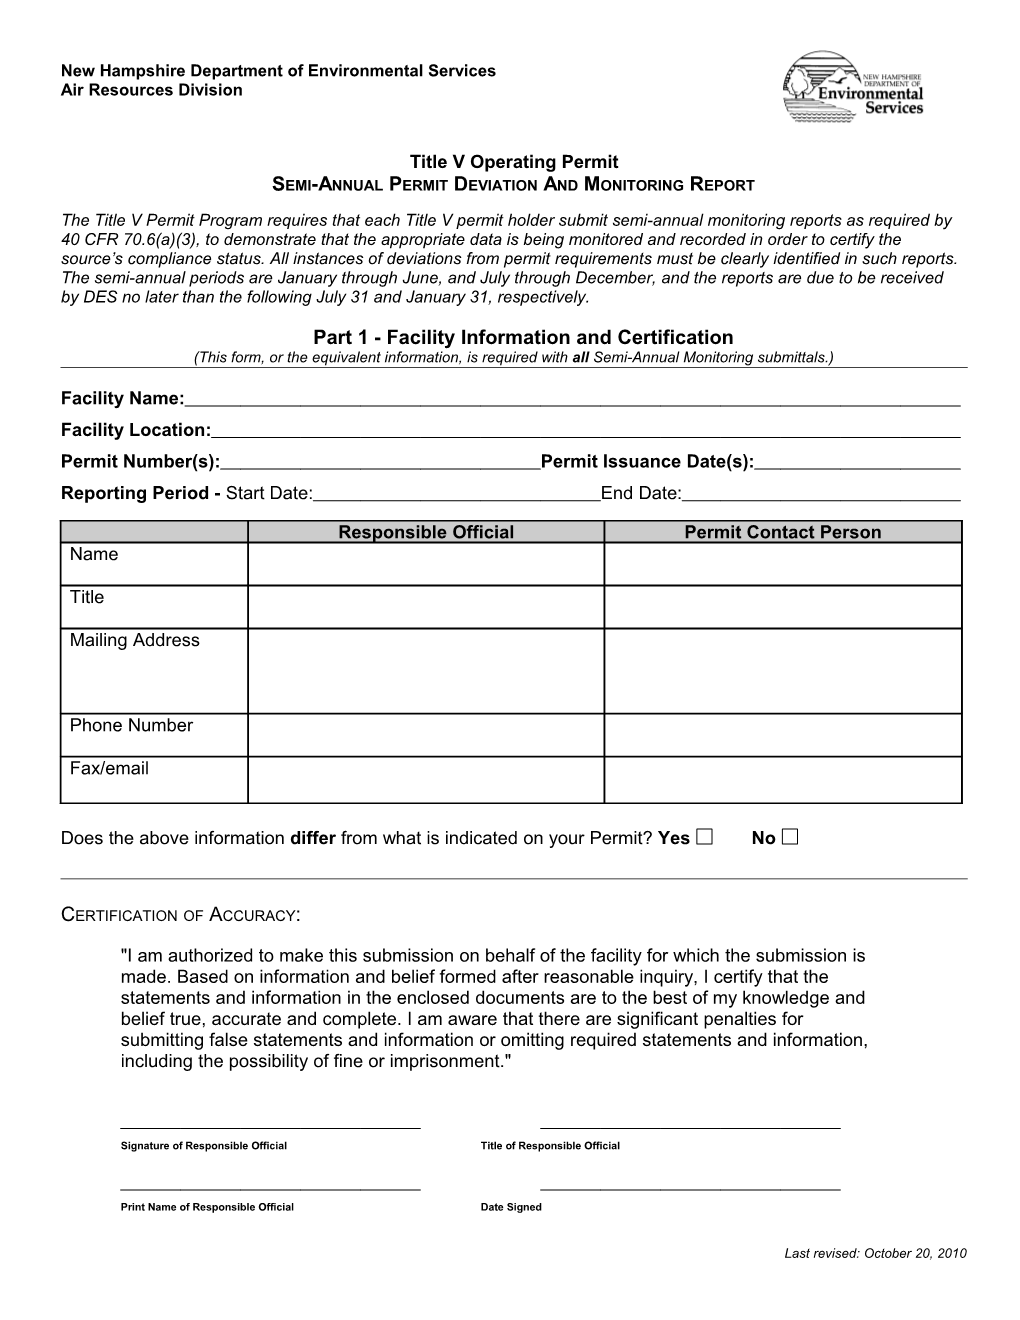 Title V Semi-Annual Permit Deviation and Monitoring Report Forms